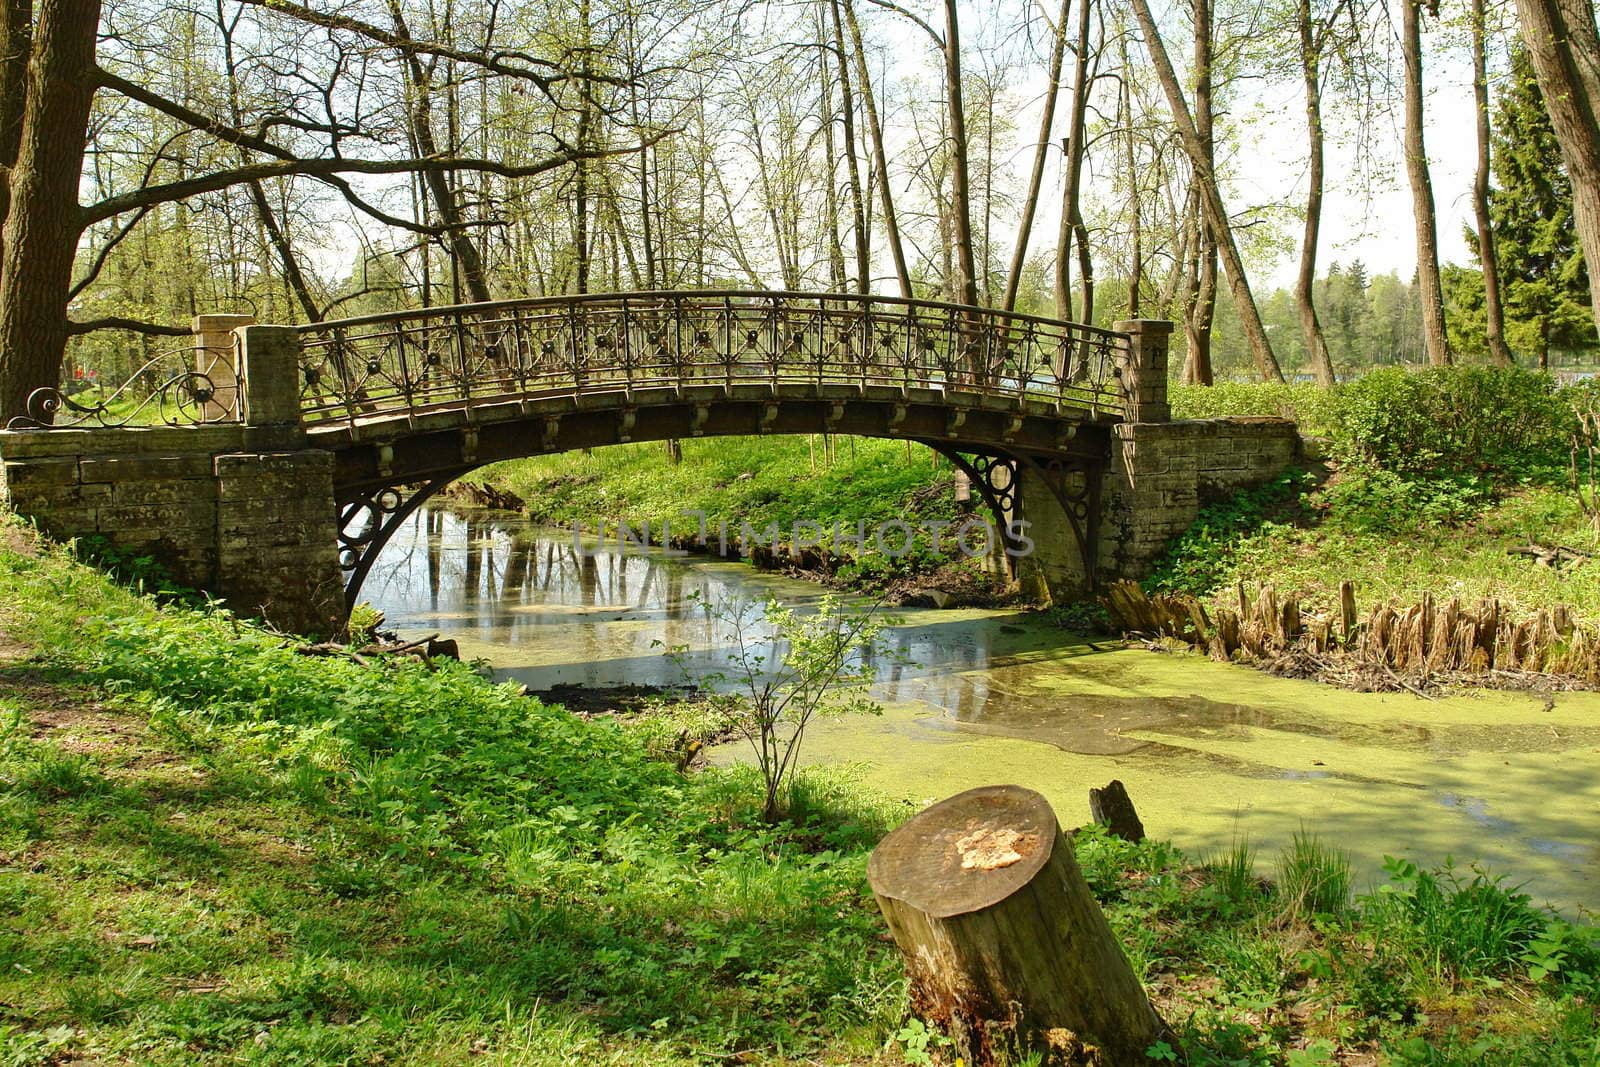 The old bridge in park by serkovfoto